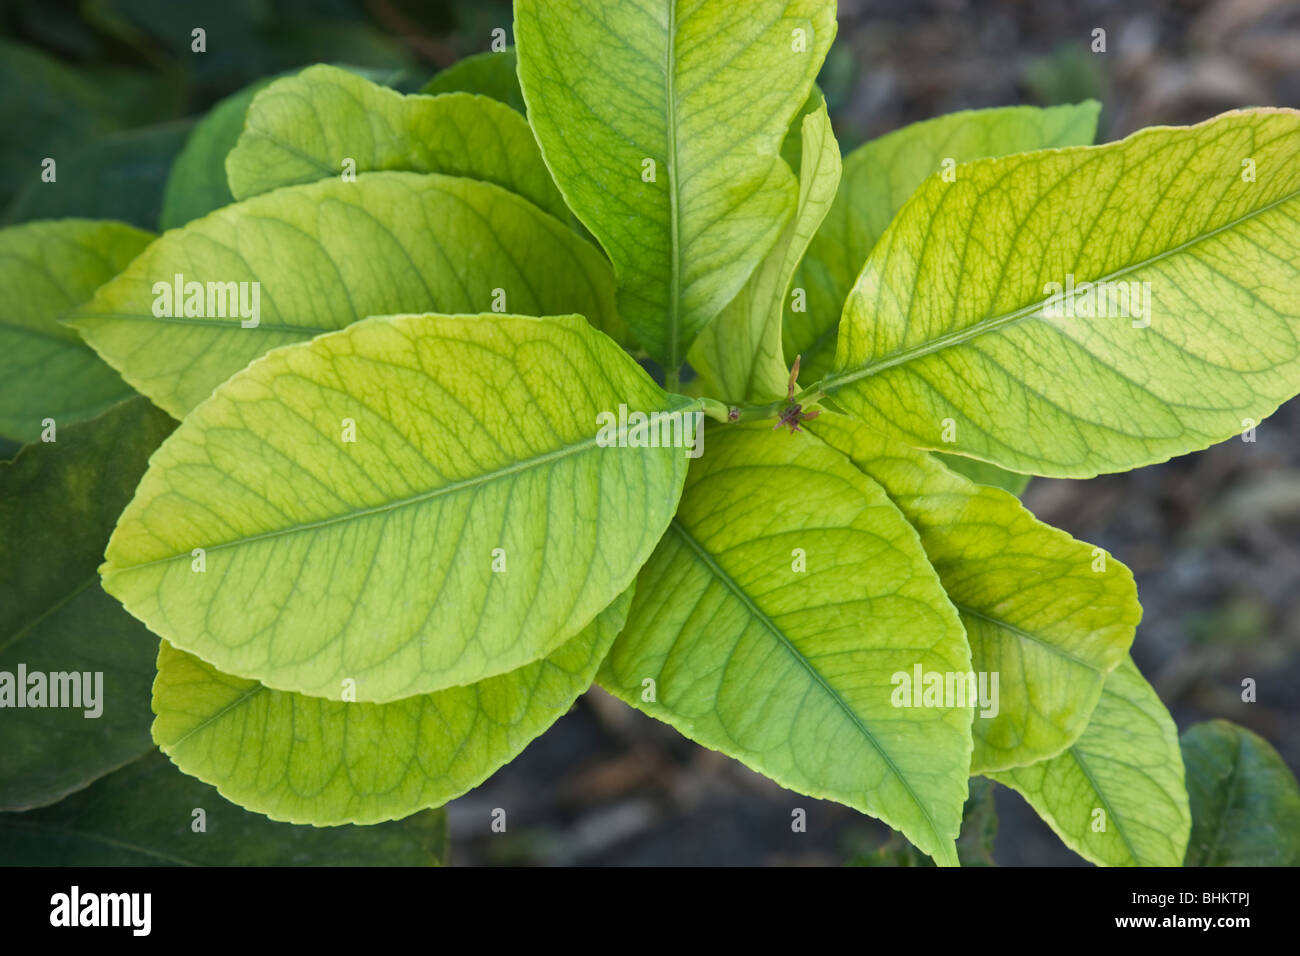 Young Lemon leaves, branch 'Citrus limon'. Stock Photo